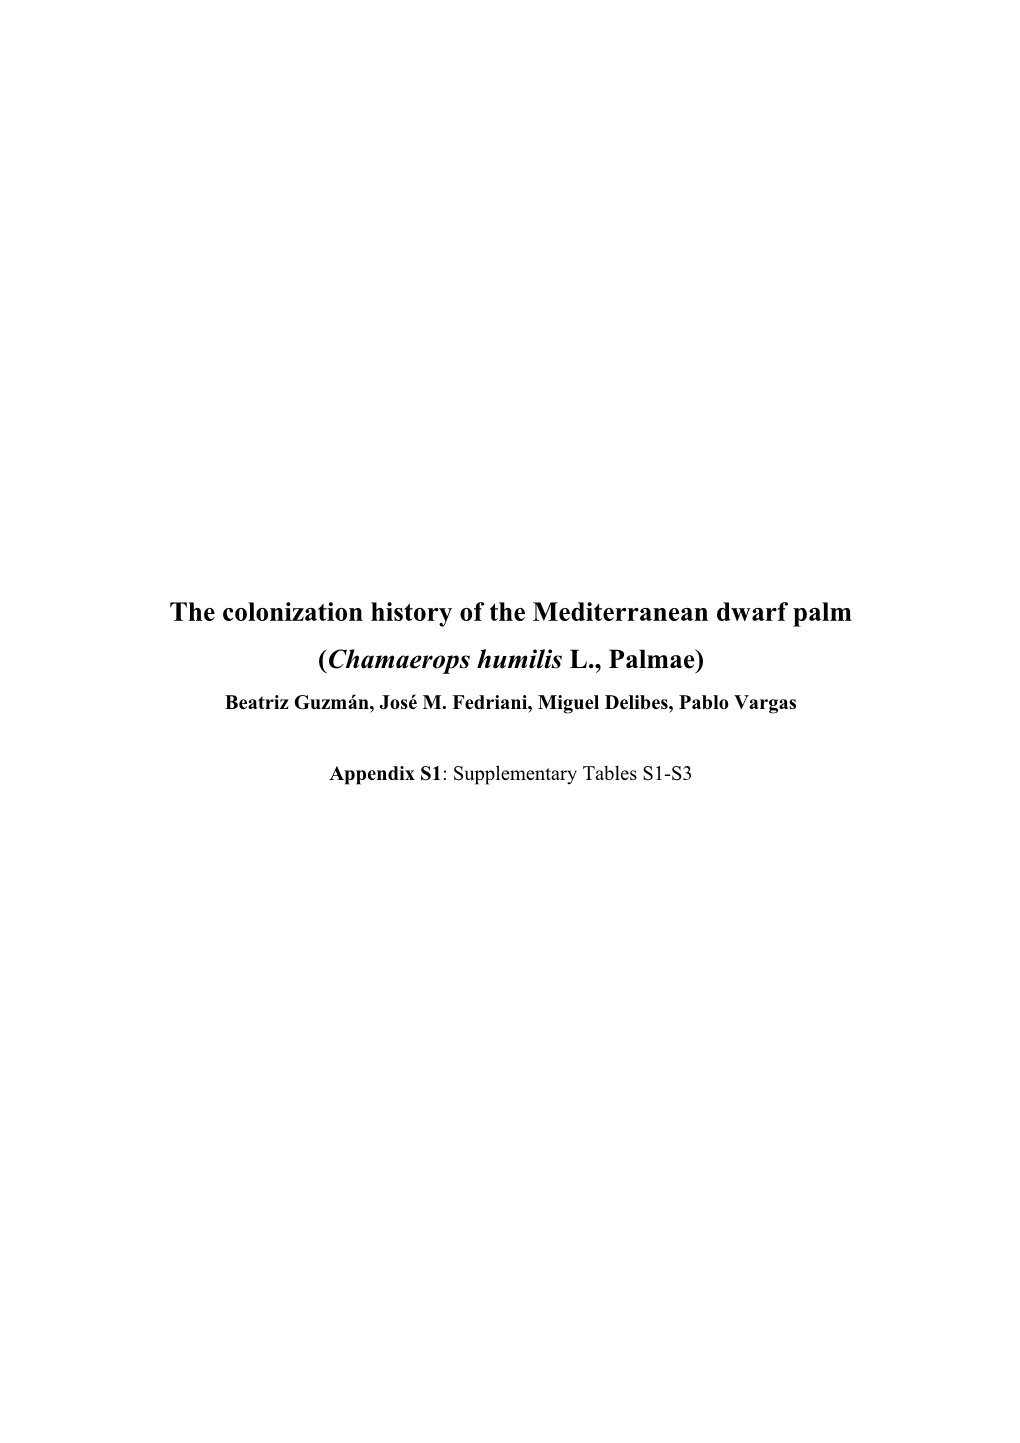 The Colonization History of the Mediterranean Dwarf Palm (Chamaerops Humilis L., Palmae)